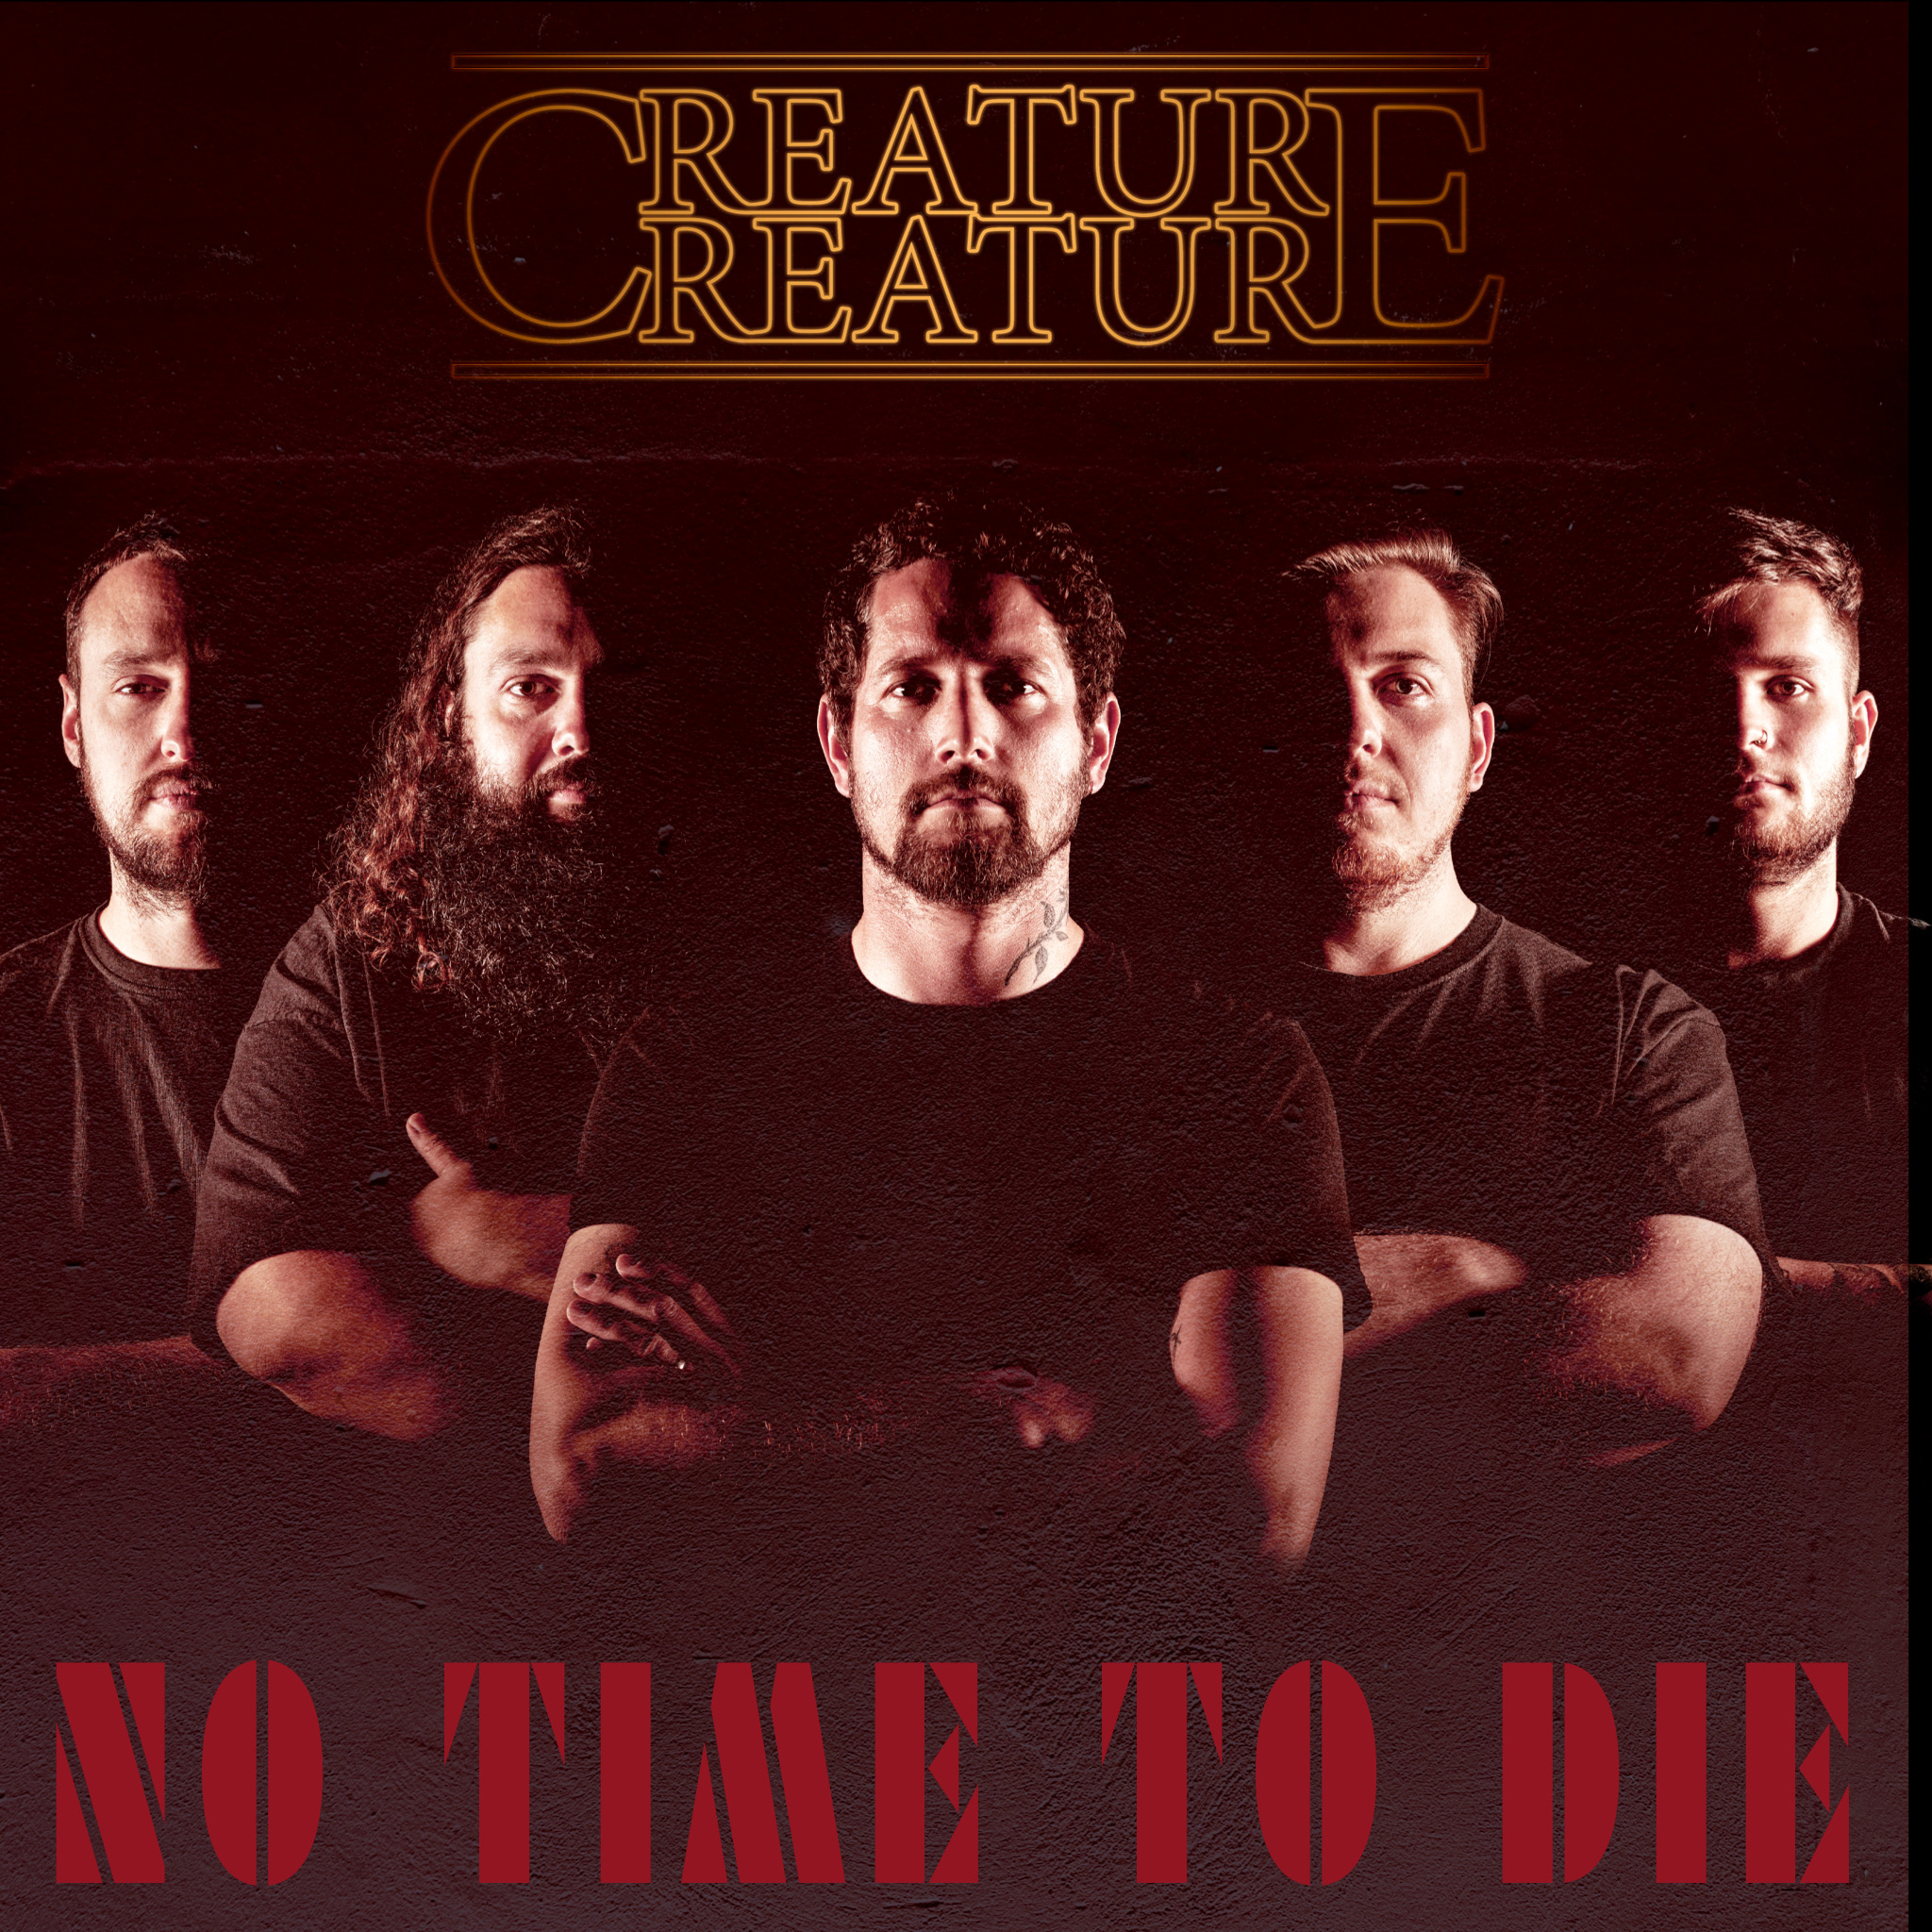 Creature Creature "No Time To Die" single artwork